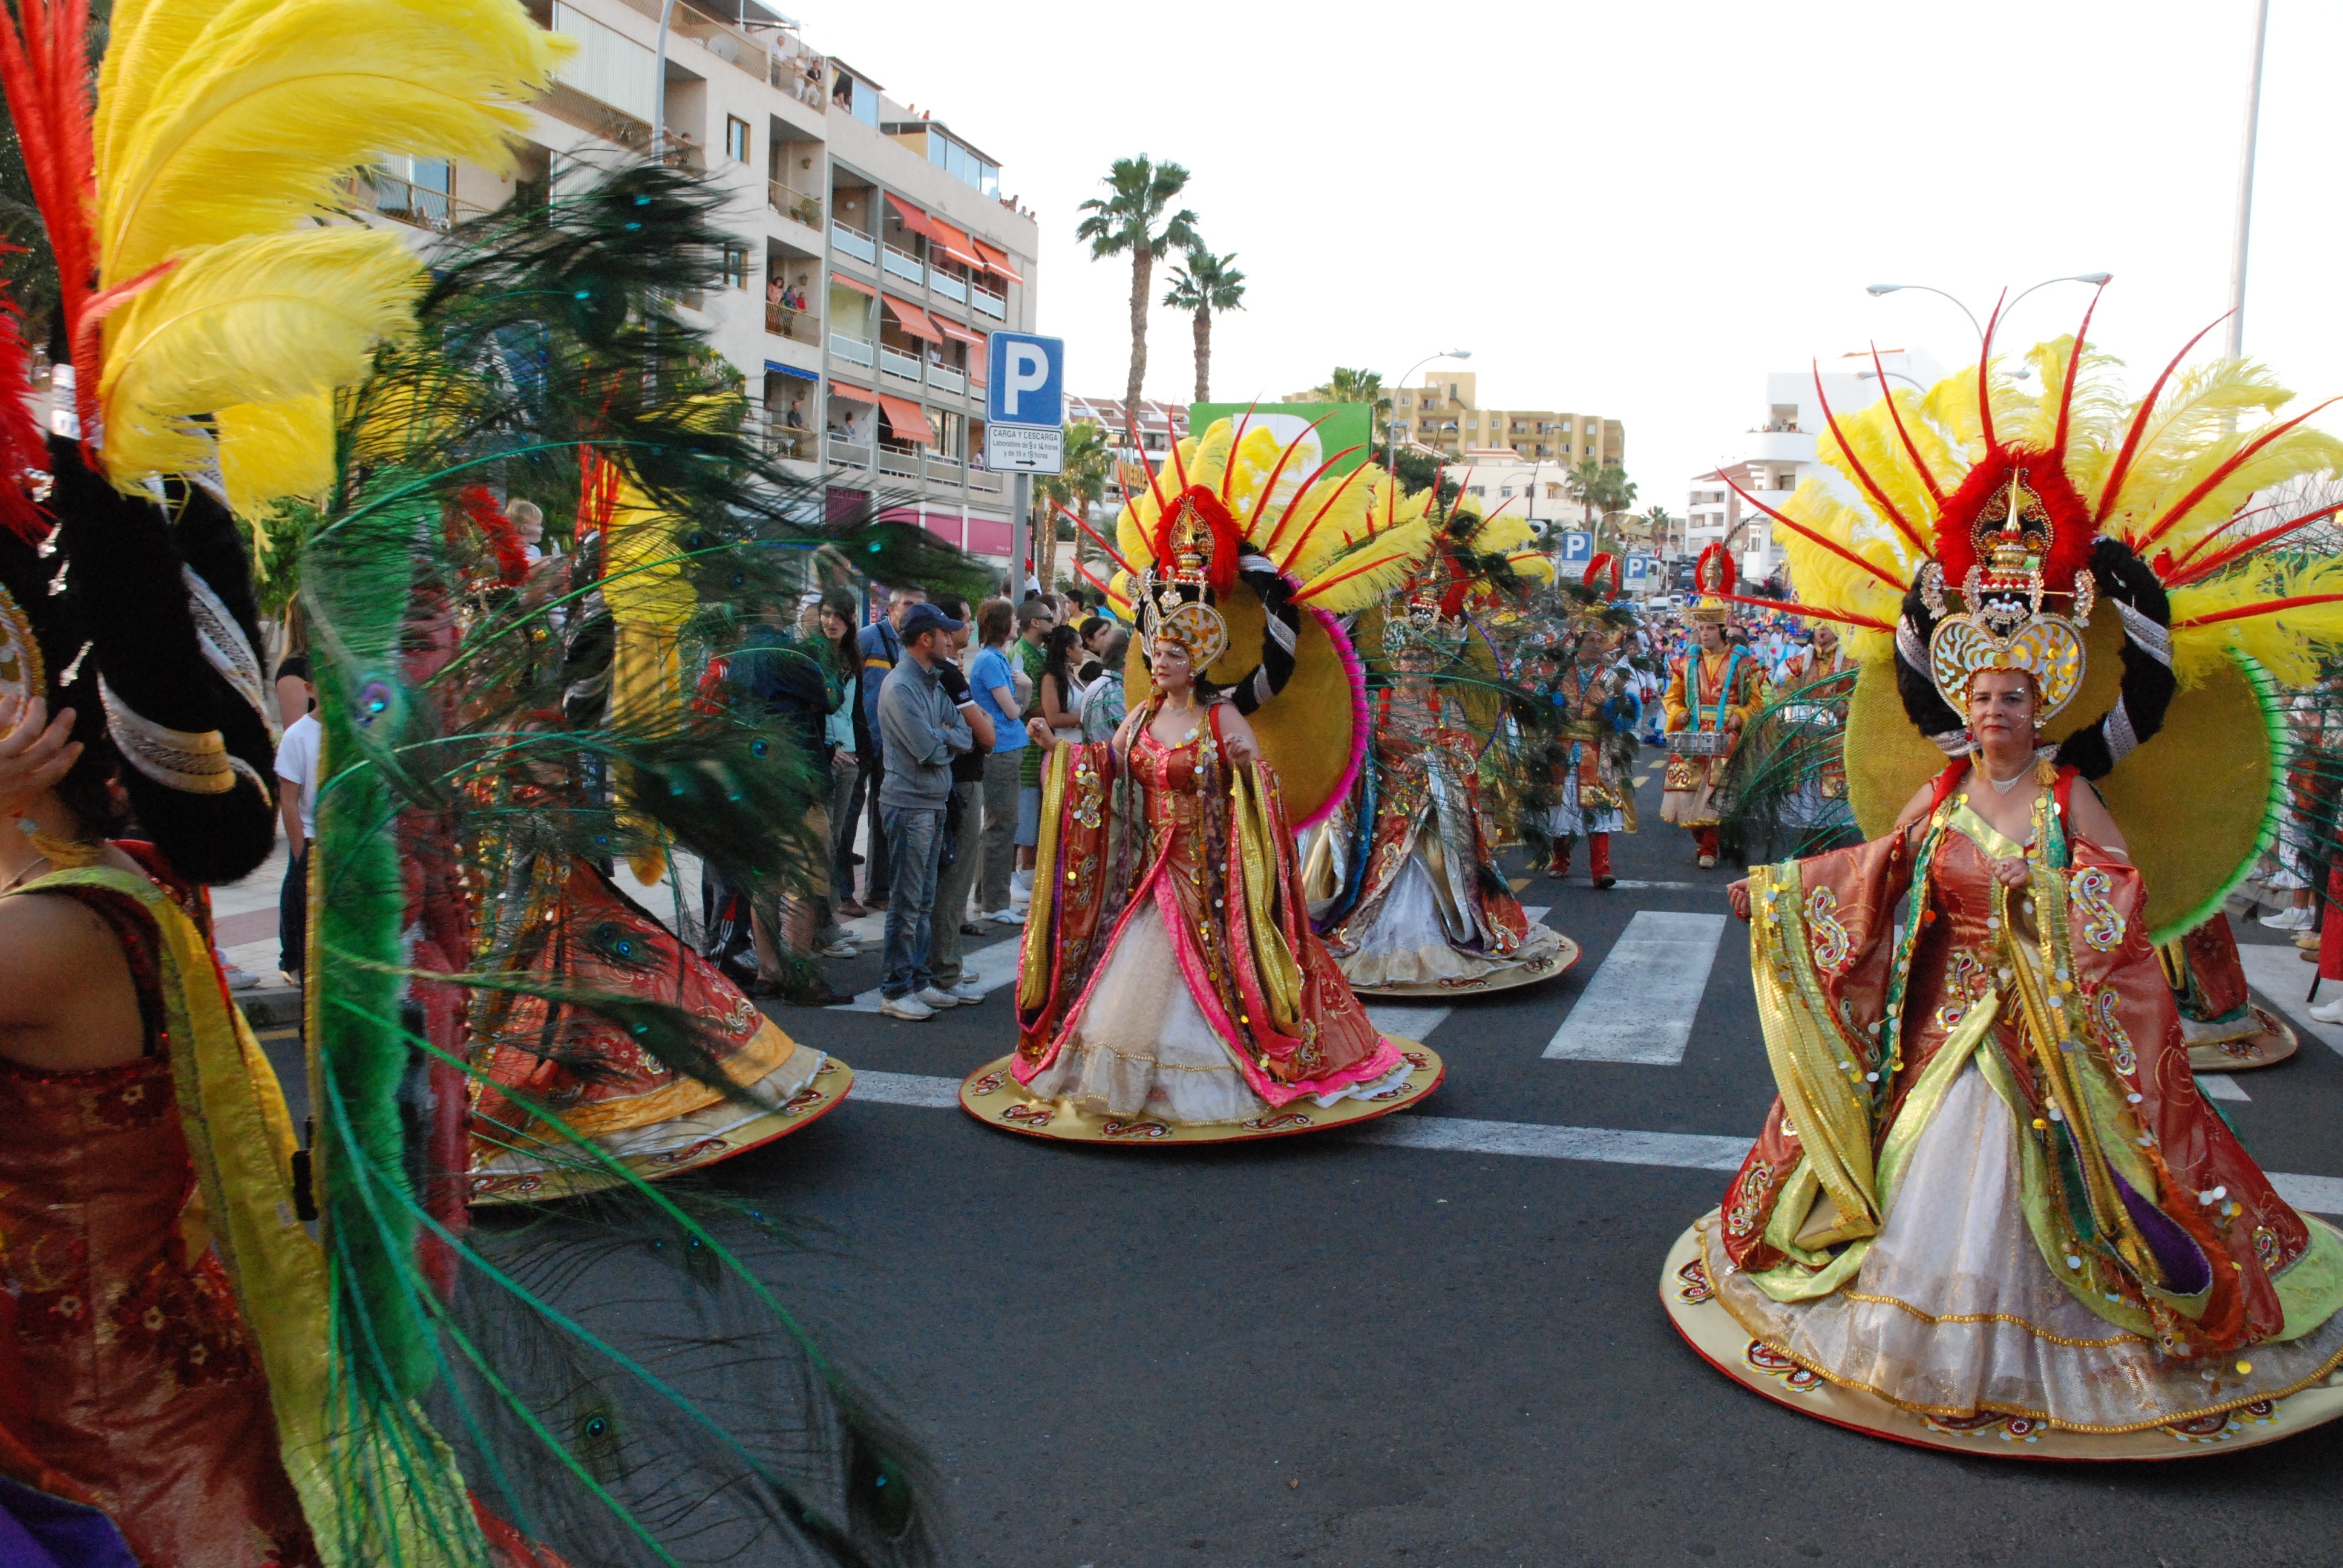 Fiesta, Party, Celebration, Carnival, celebration, traditional festival